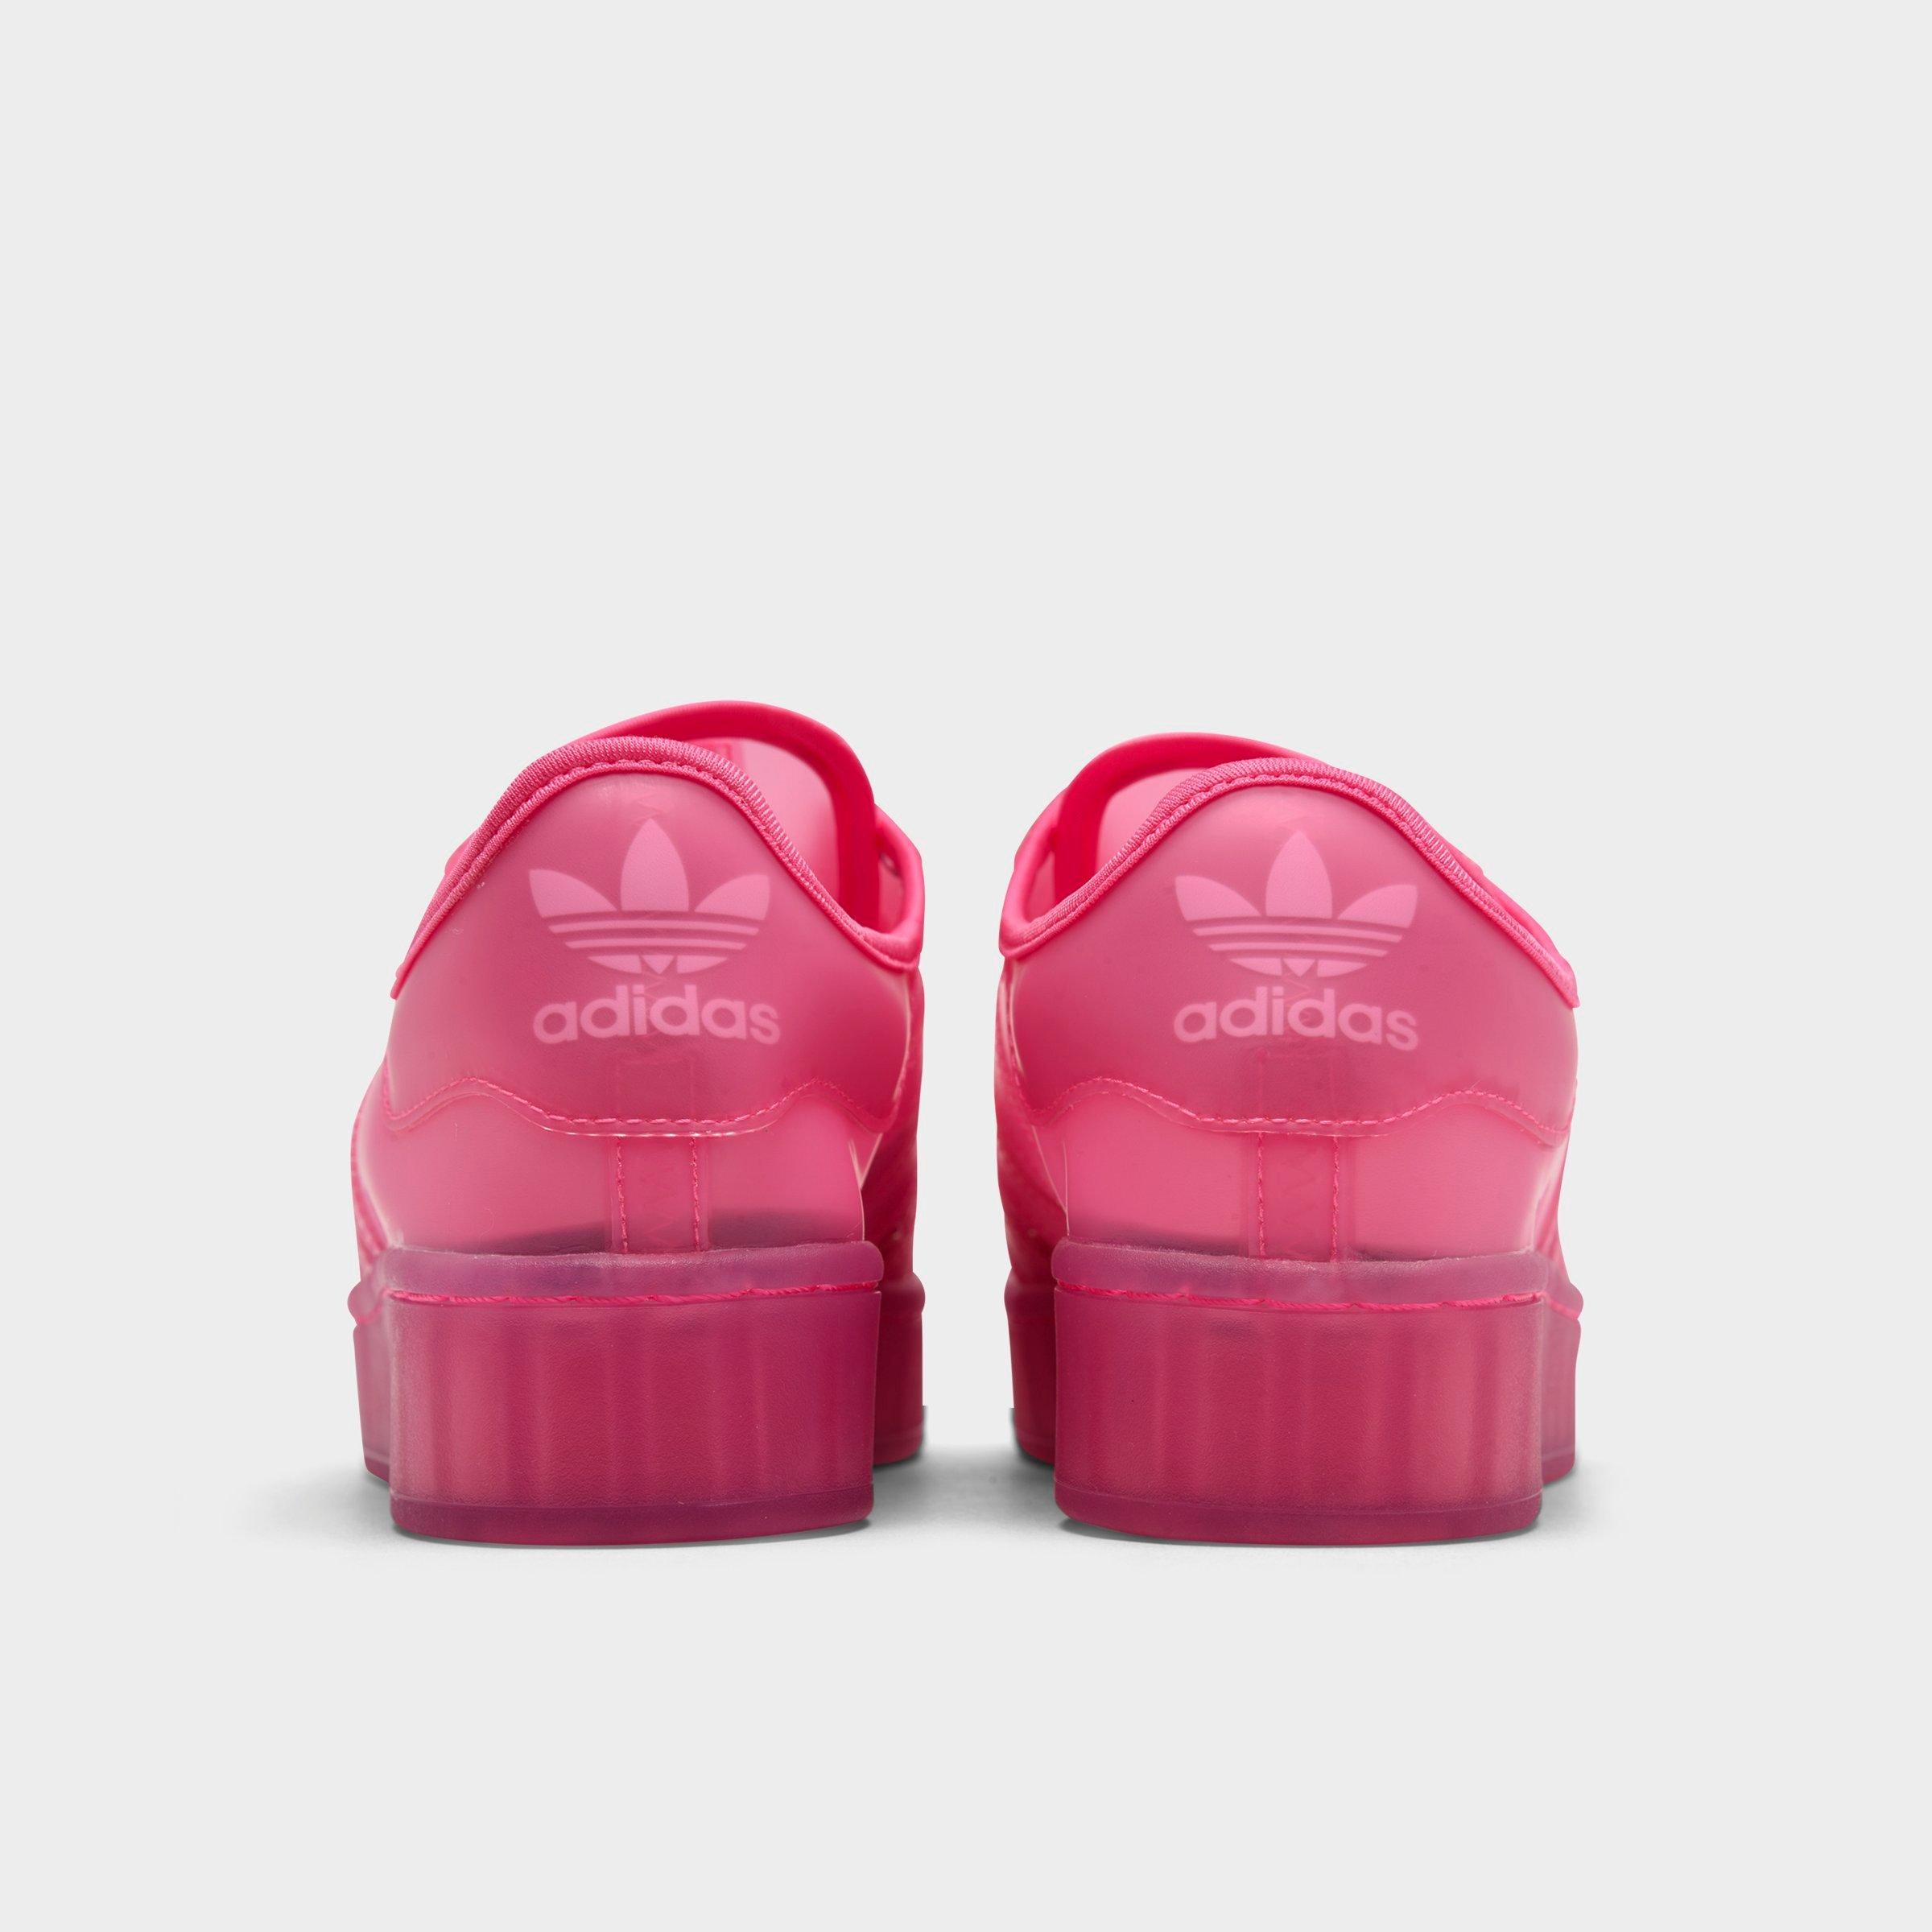 adidas jelly slides